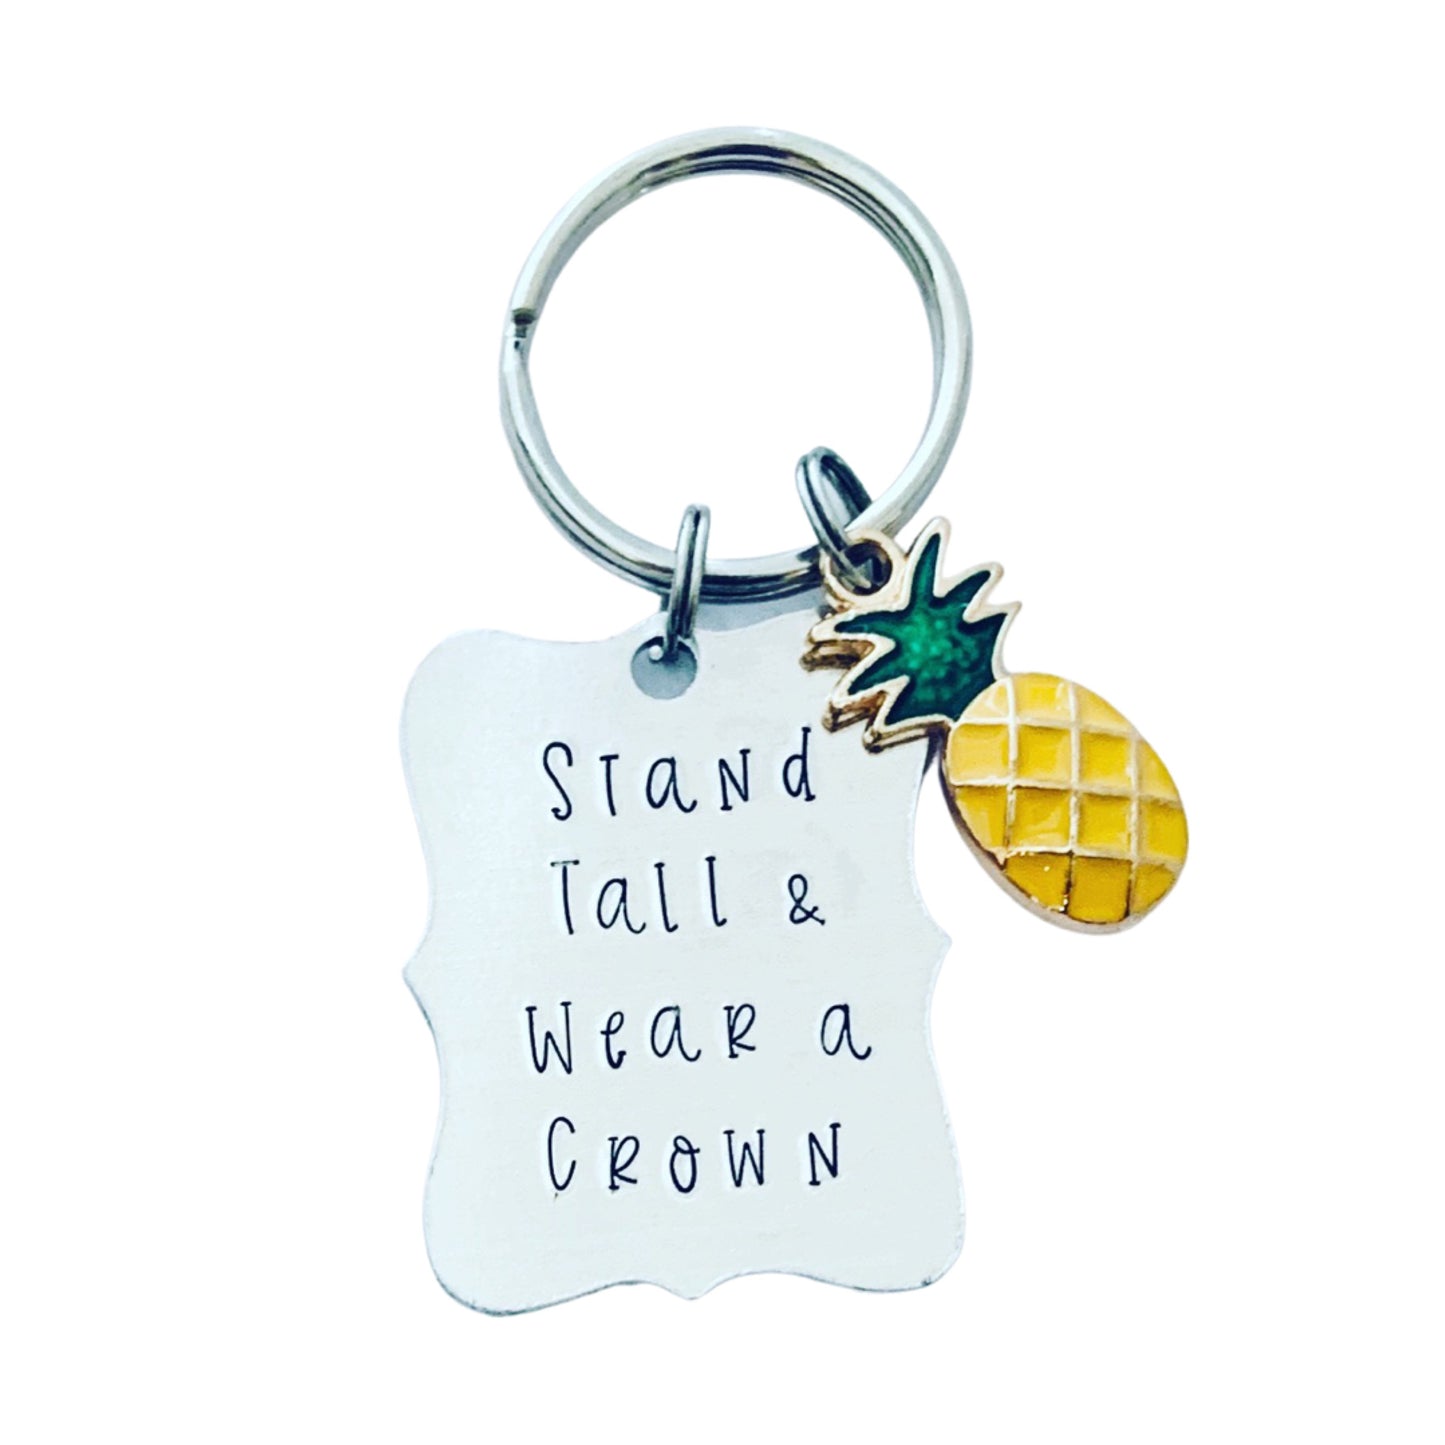 Stand tall & wear a crown | Key Chain